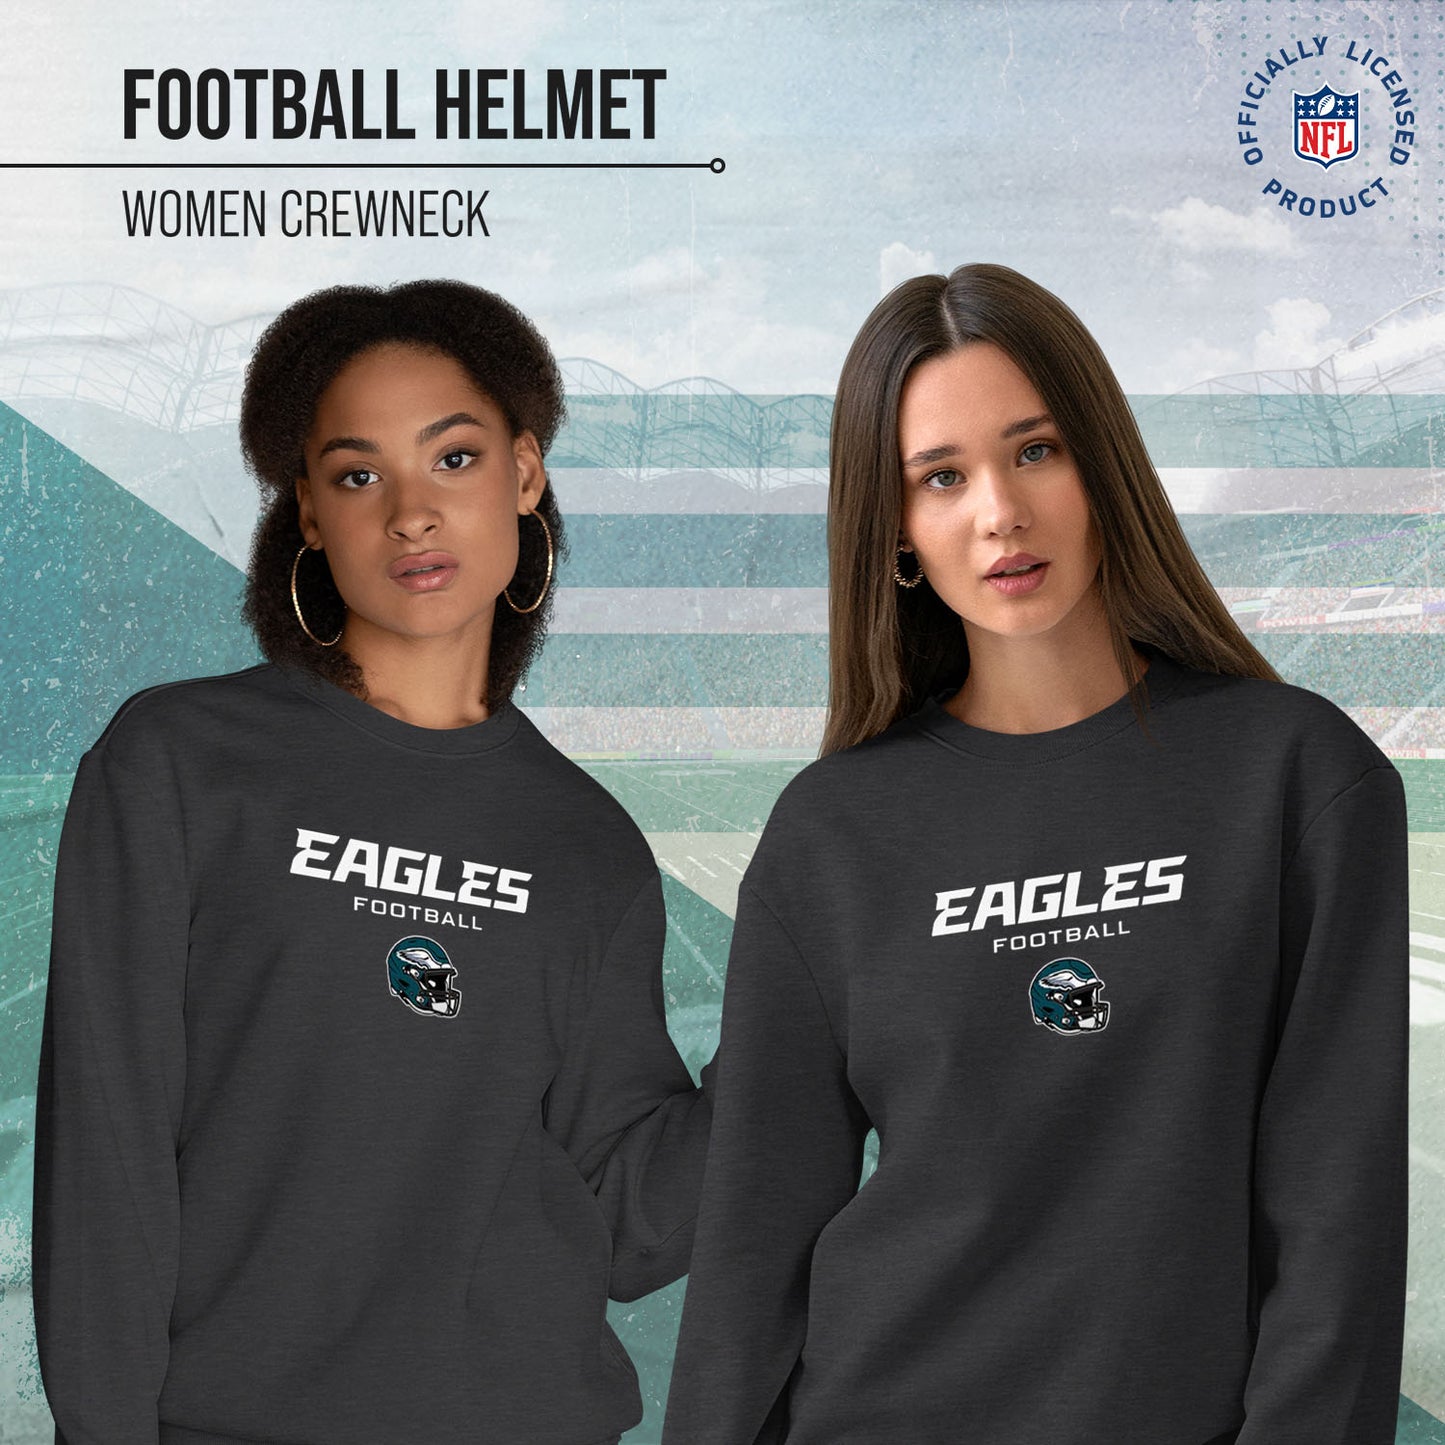 Philadelphia Eagles Women's NFL Football Helmet Charcoal Slouchy Crewneck -Tagless Lightweight Pullover - Charcoal